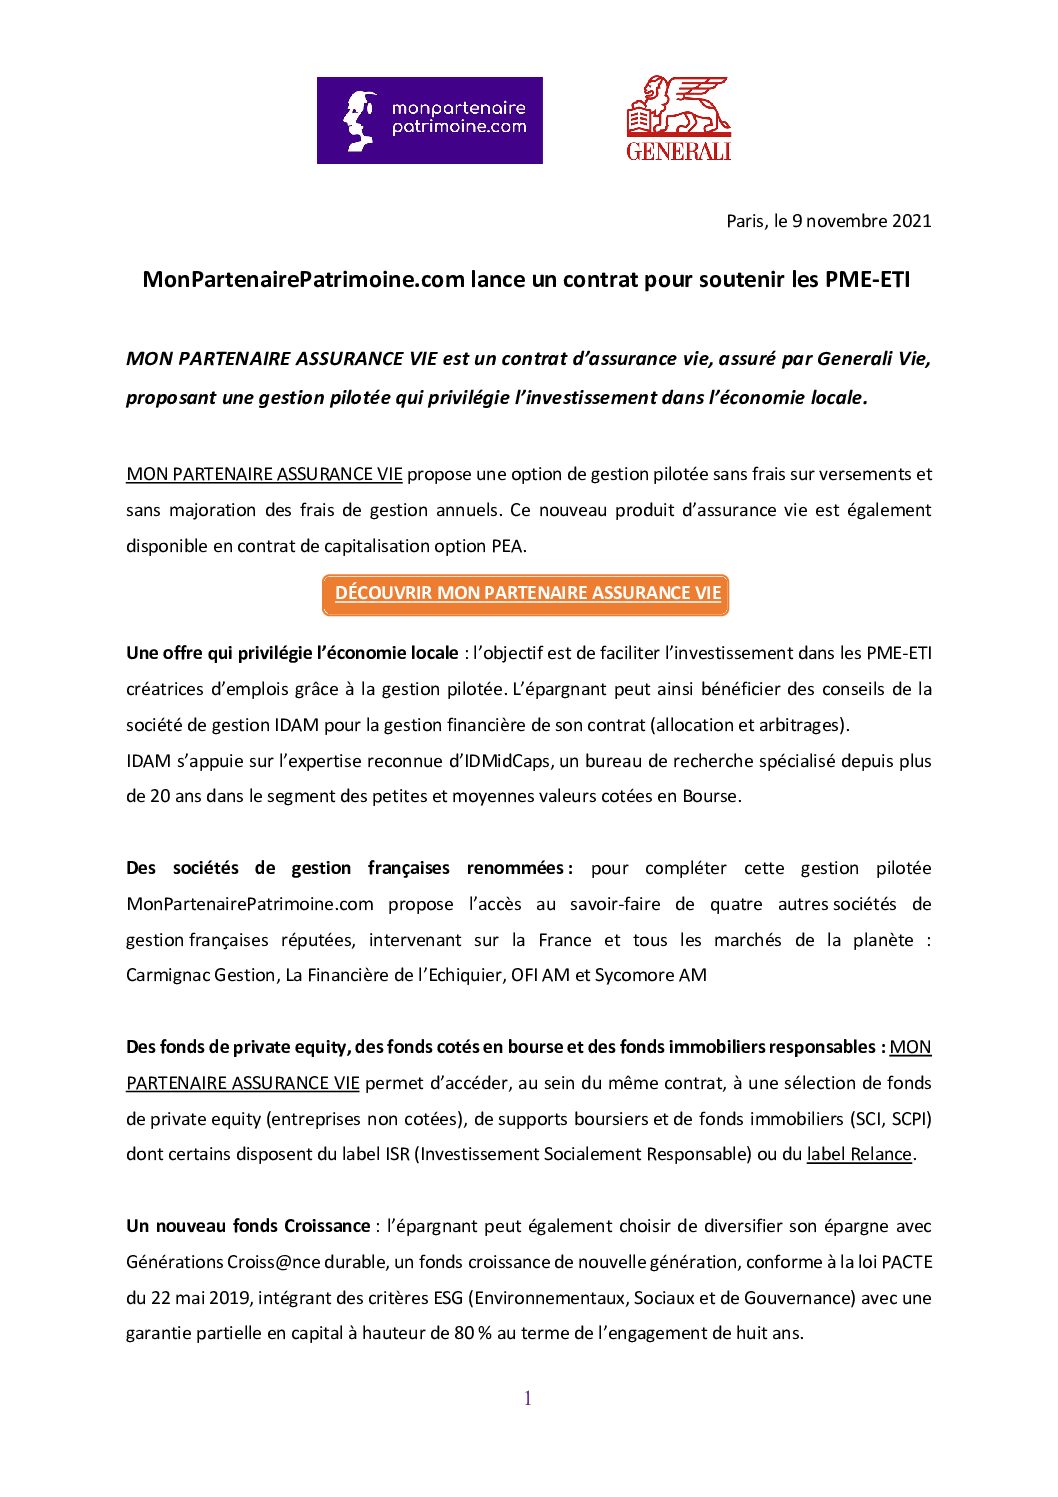 CP AssuranceVie MPP 20211109-1-pdf